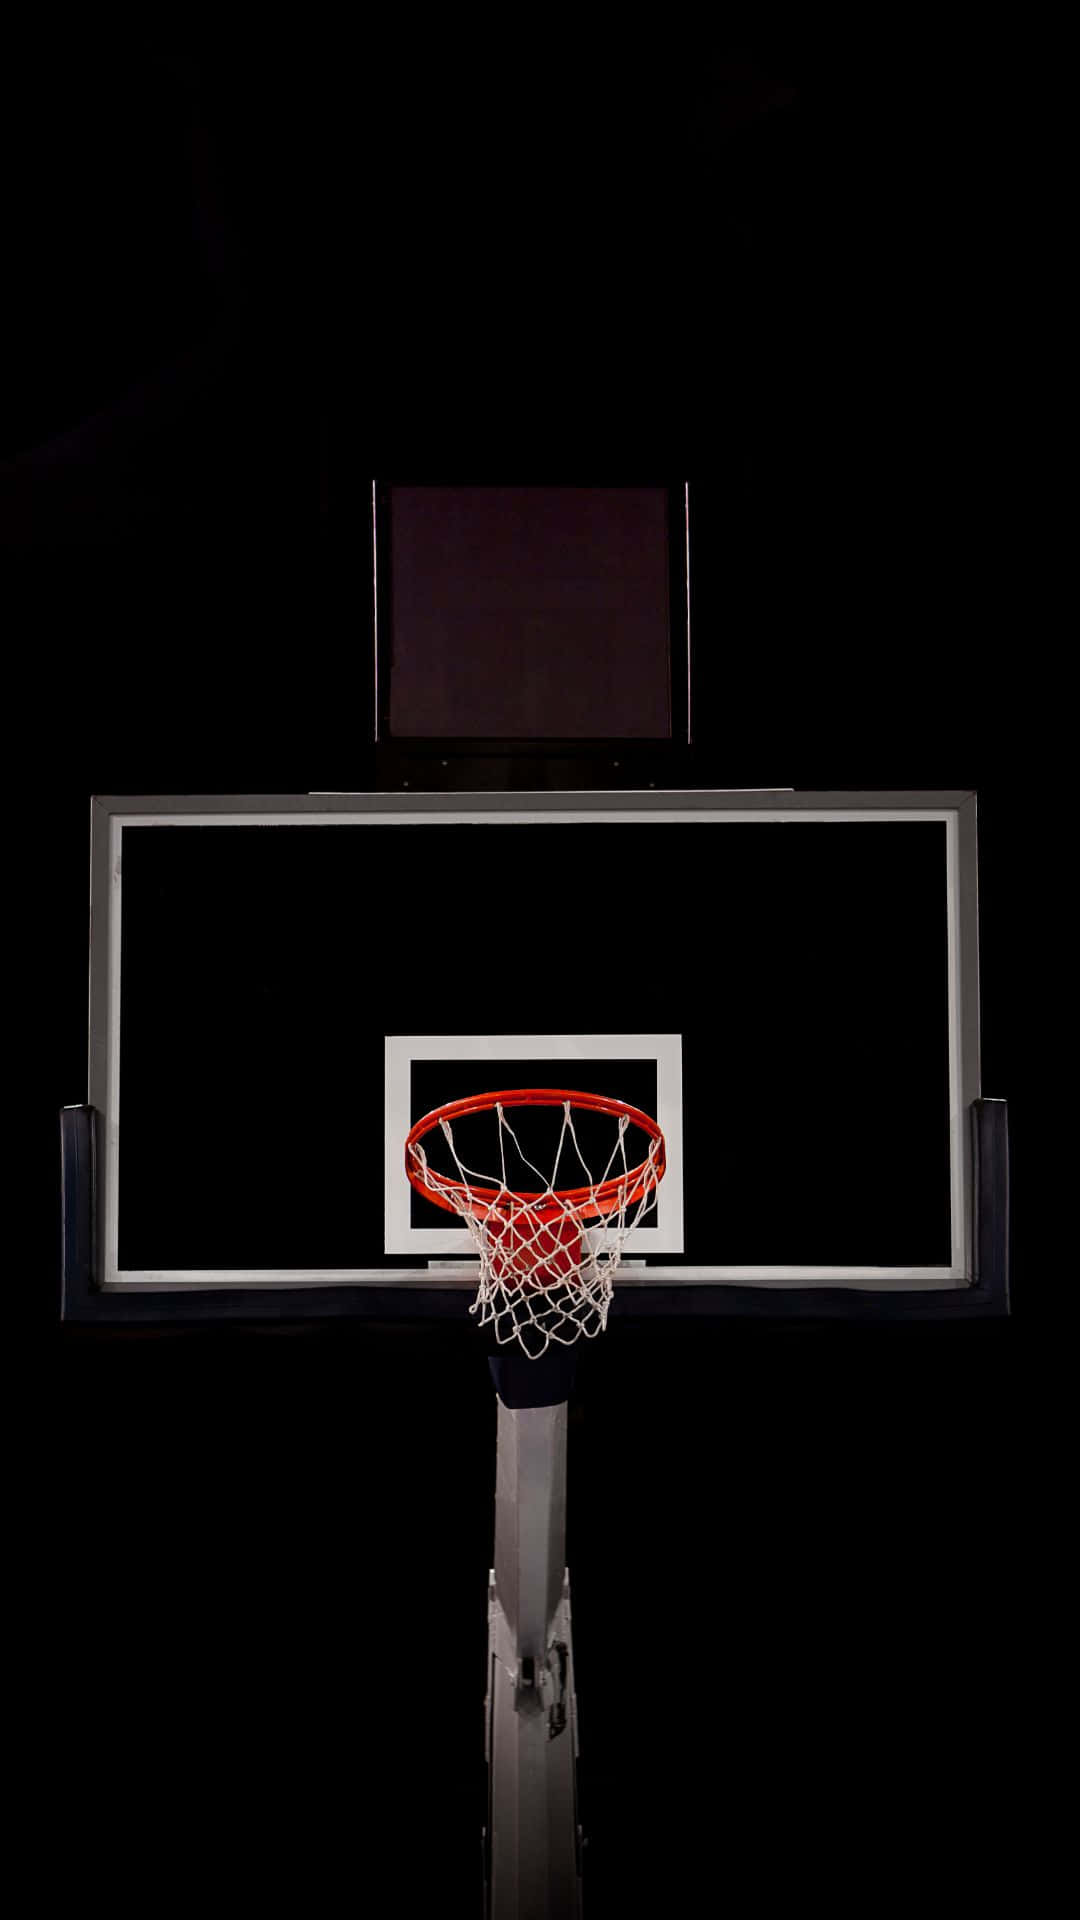 Basketball Hoop Against Black Background Wallpaper